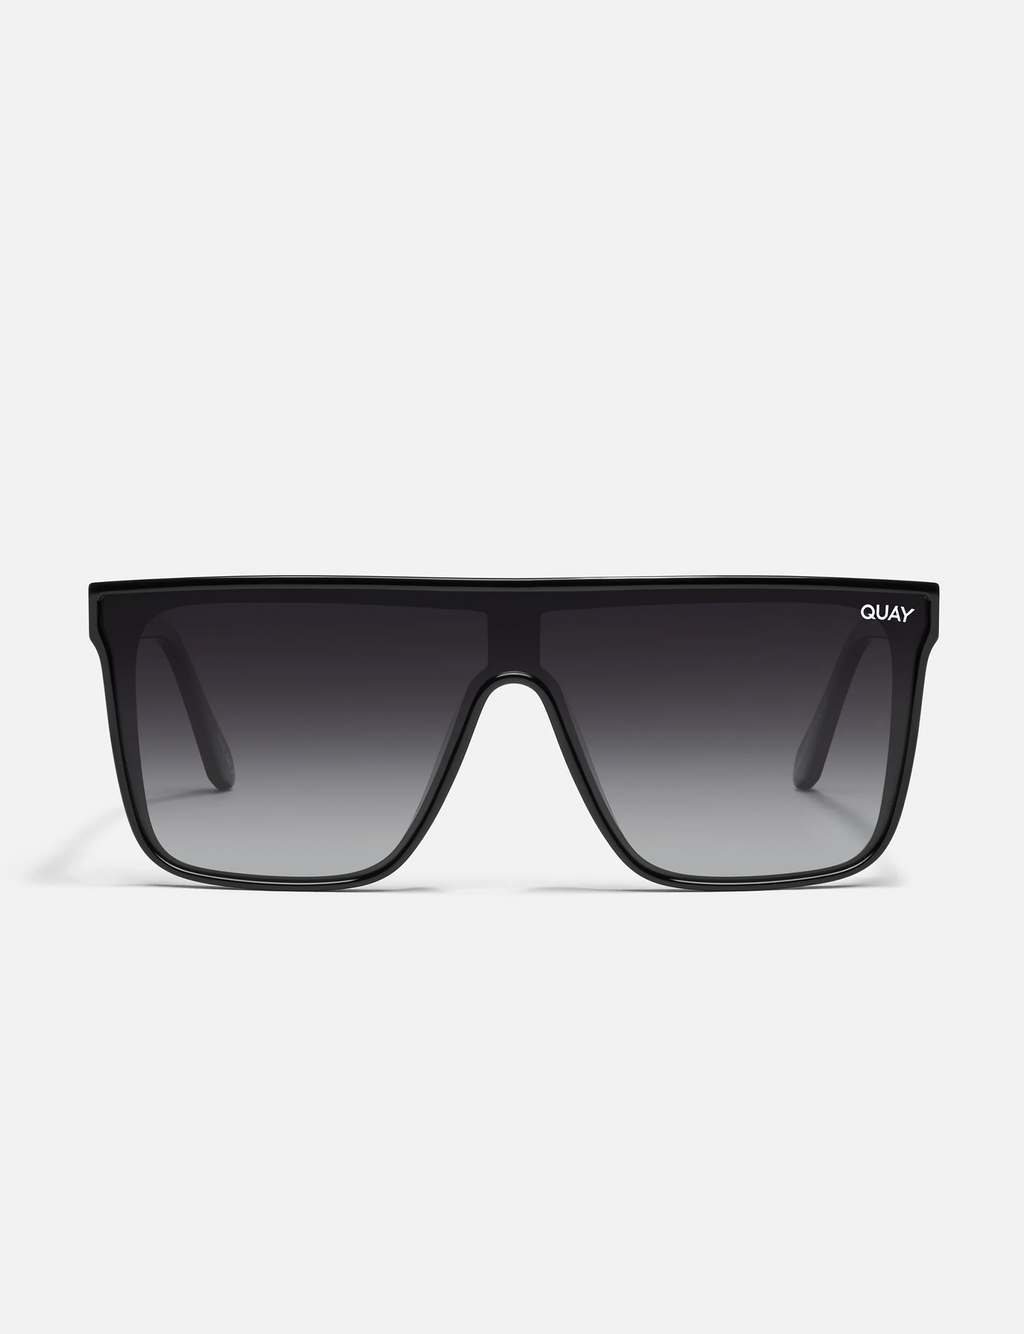 Nightfall Polarized Sunglasses, Black Smoke